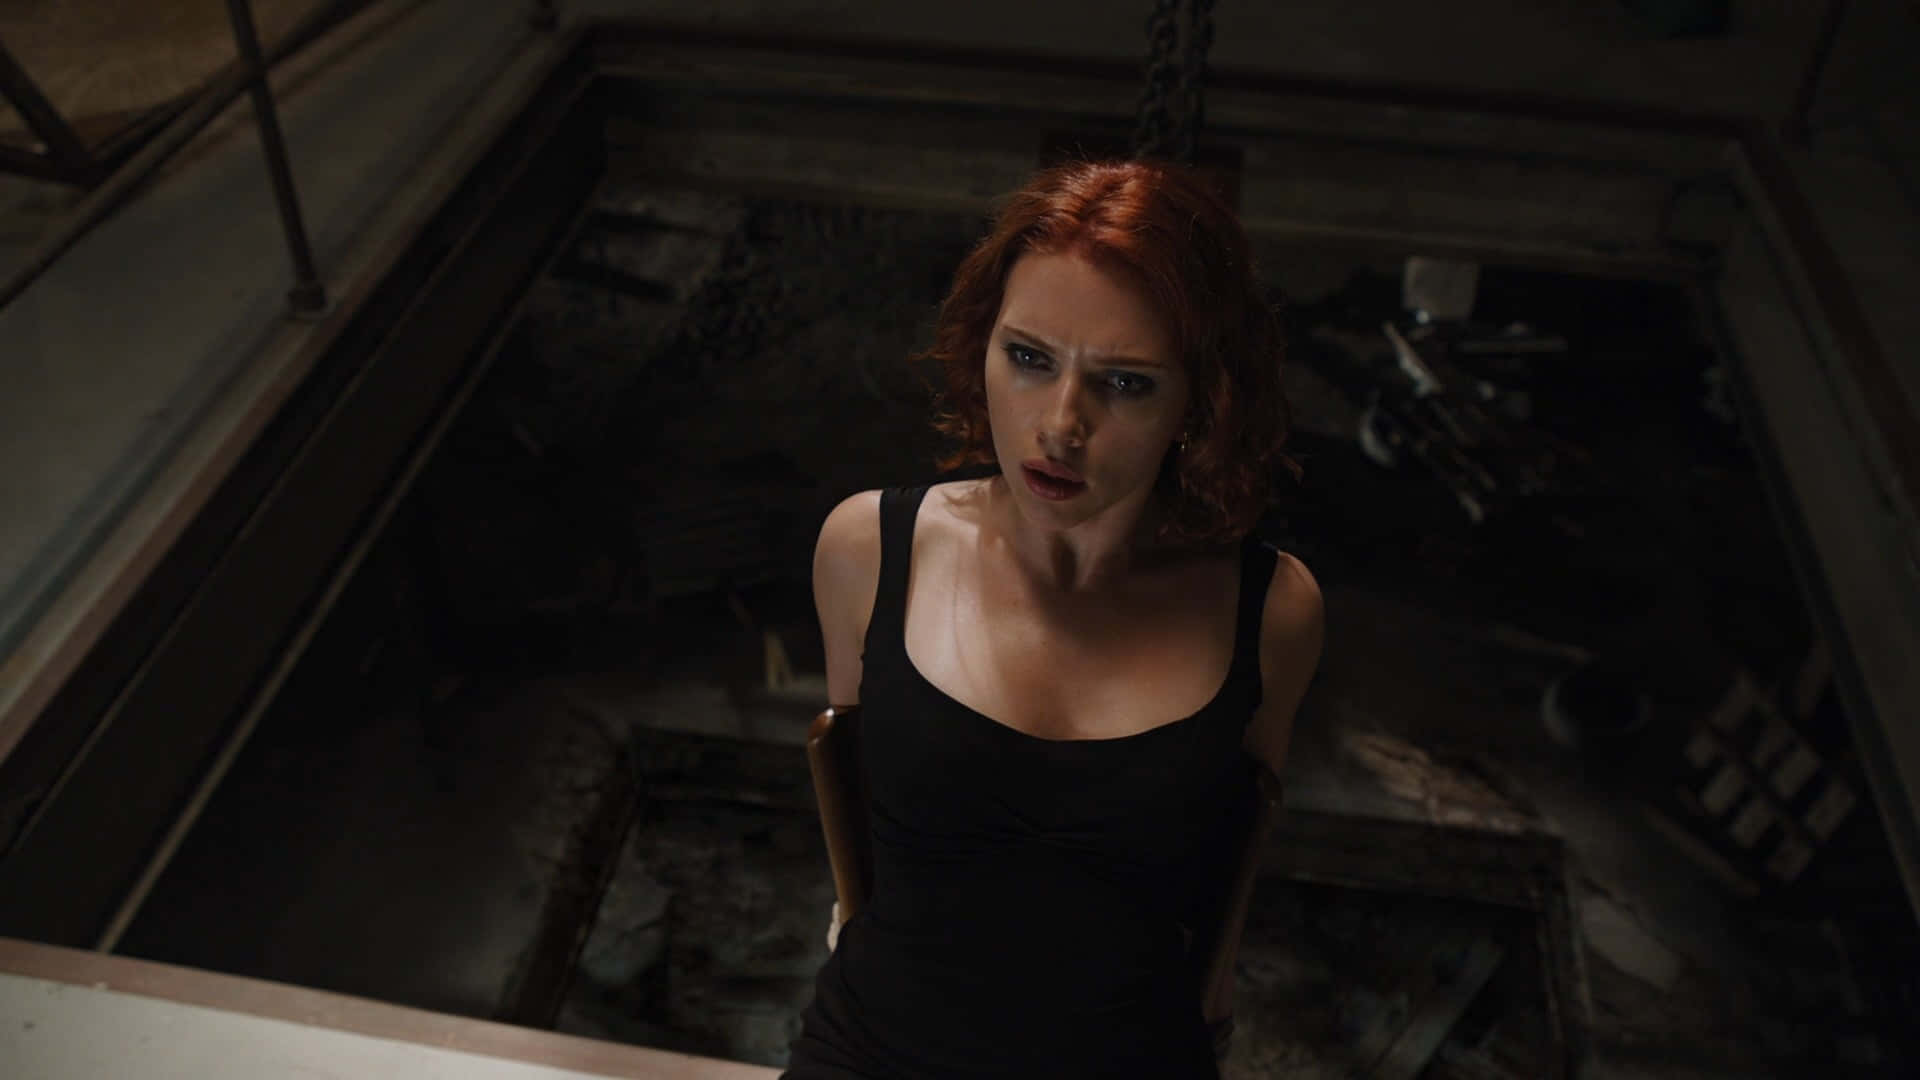 Natasharomanoff Als Black Widow In Marvel's Avengers